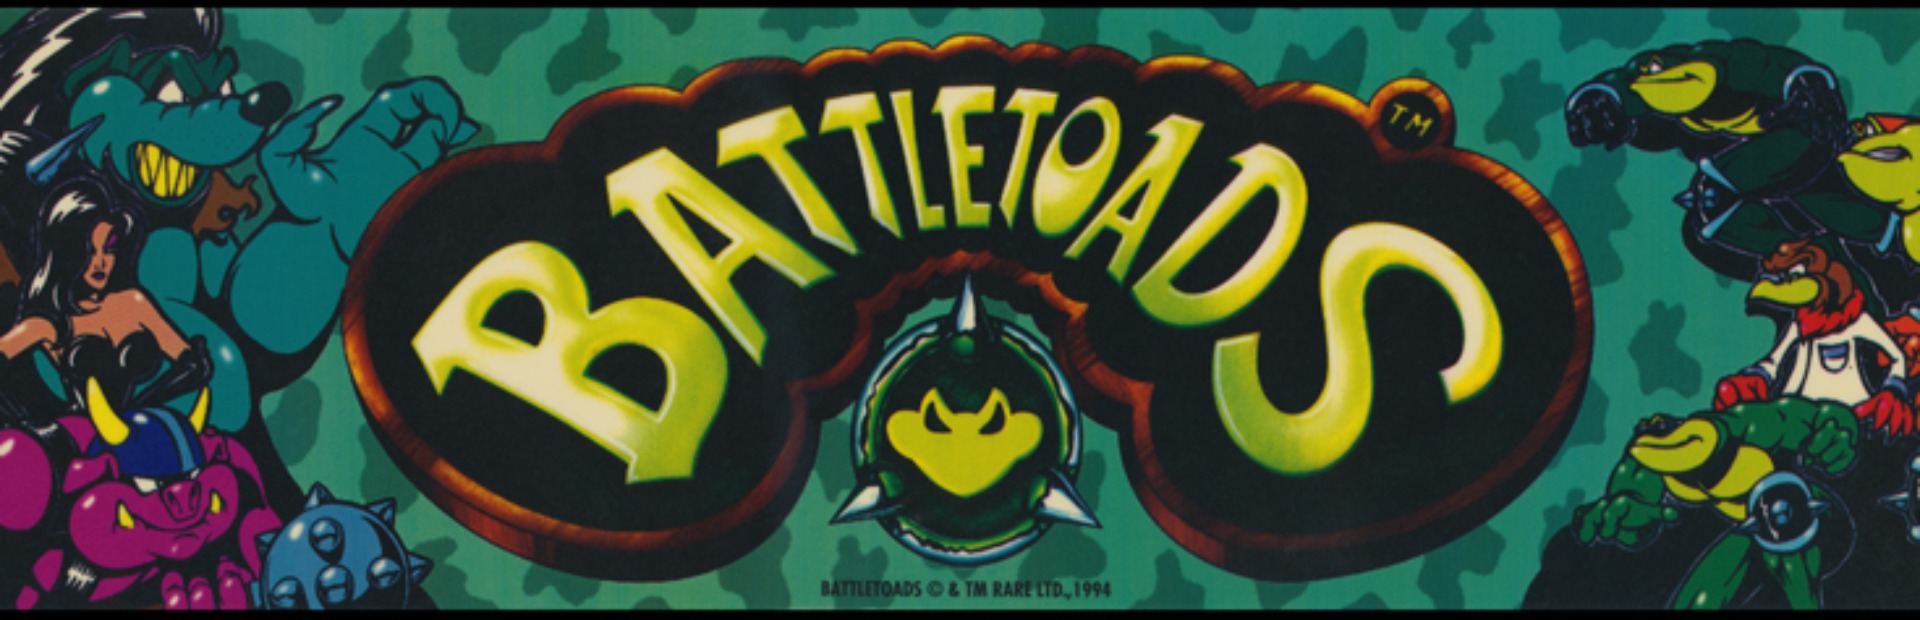 Battletoads разработчики. Батлтоадс Раш. Battletoads Arcade. Игровой автомат Battletoads.